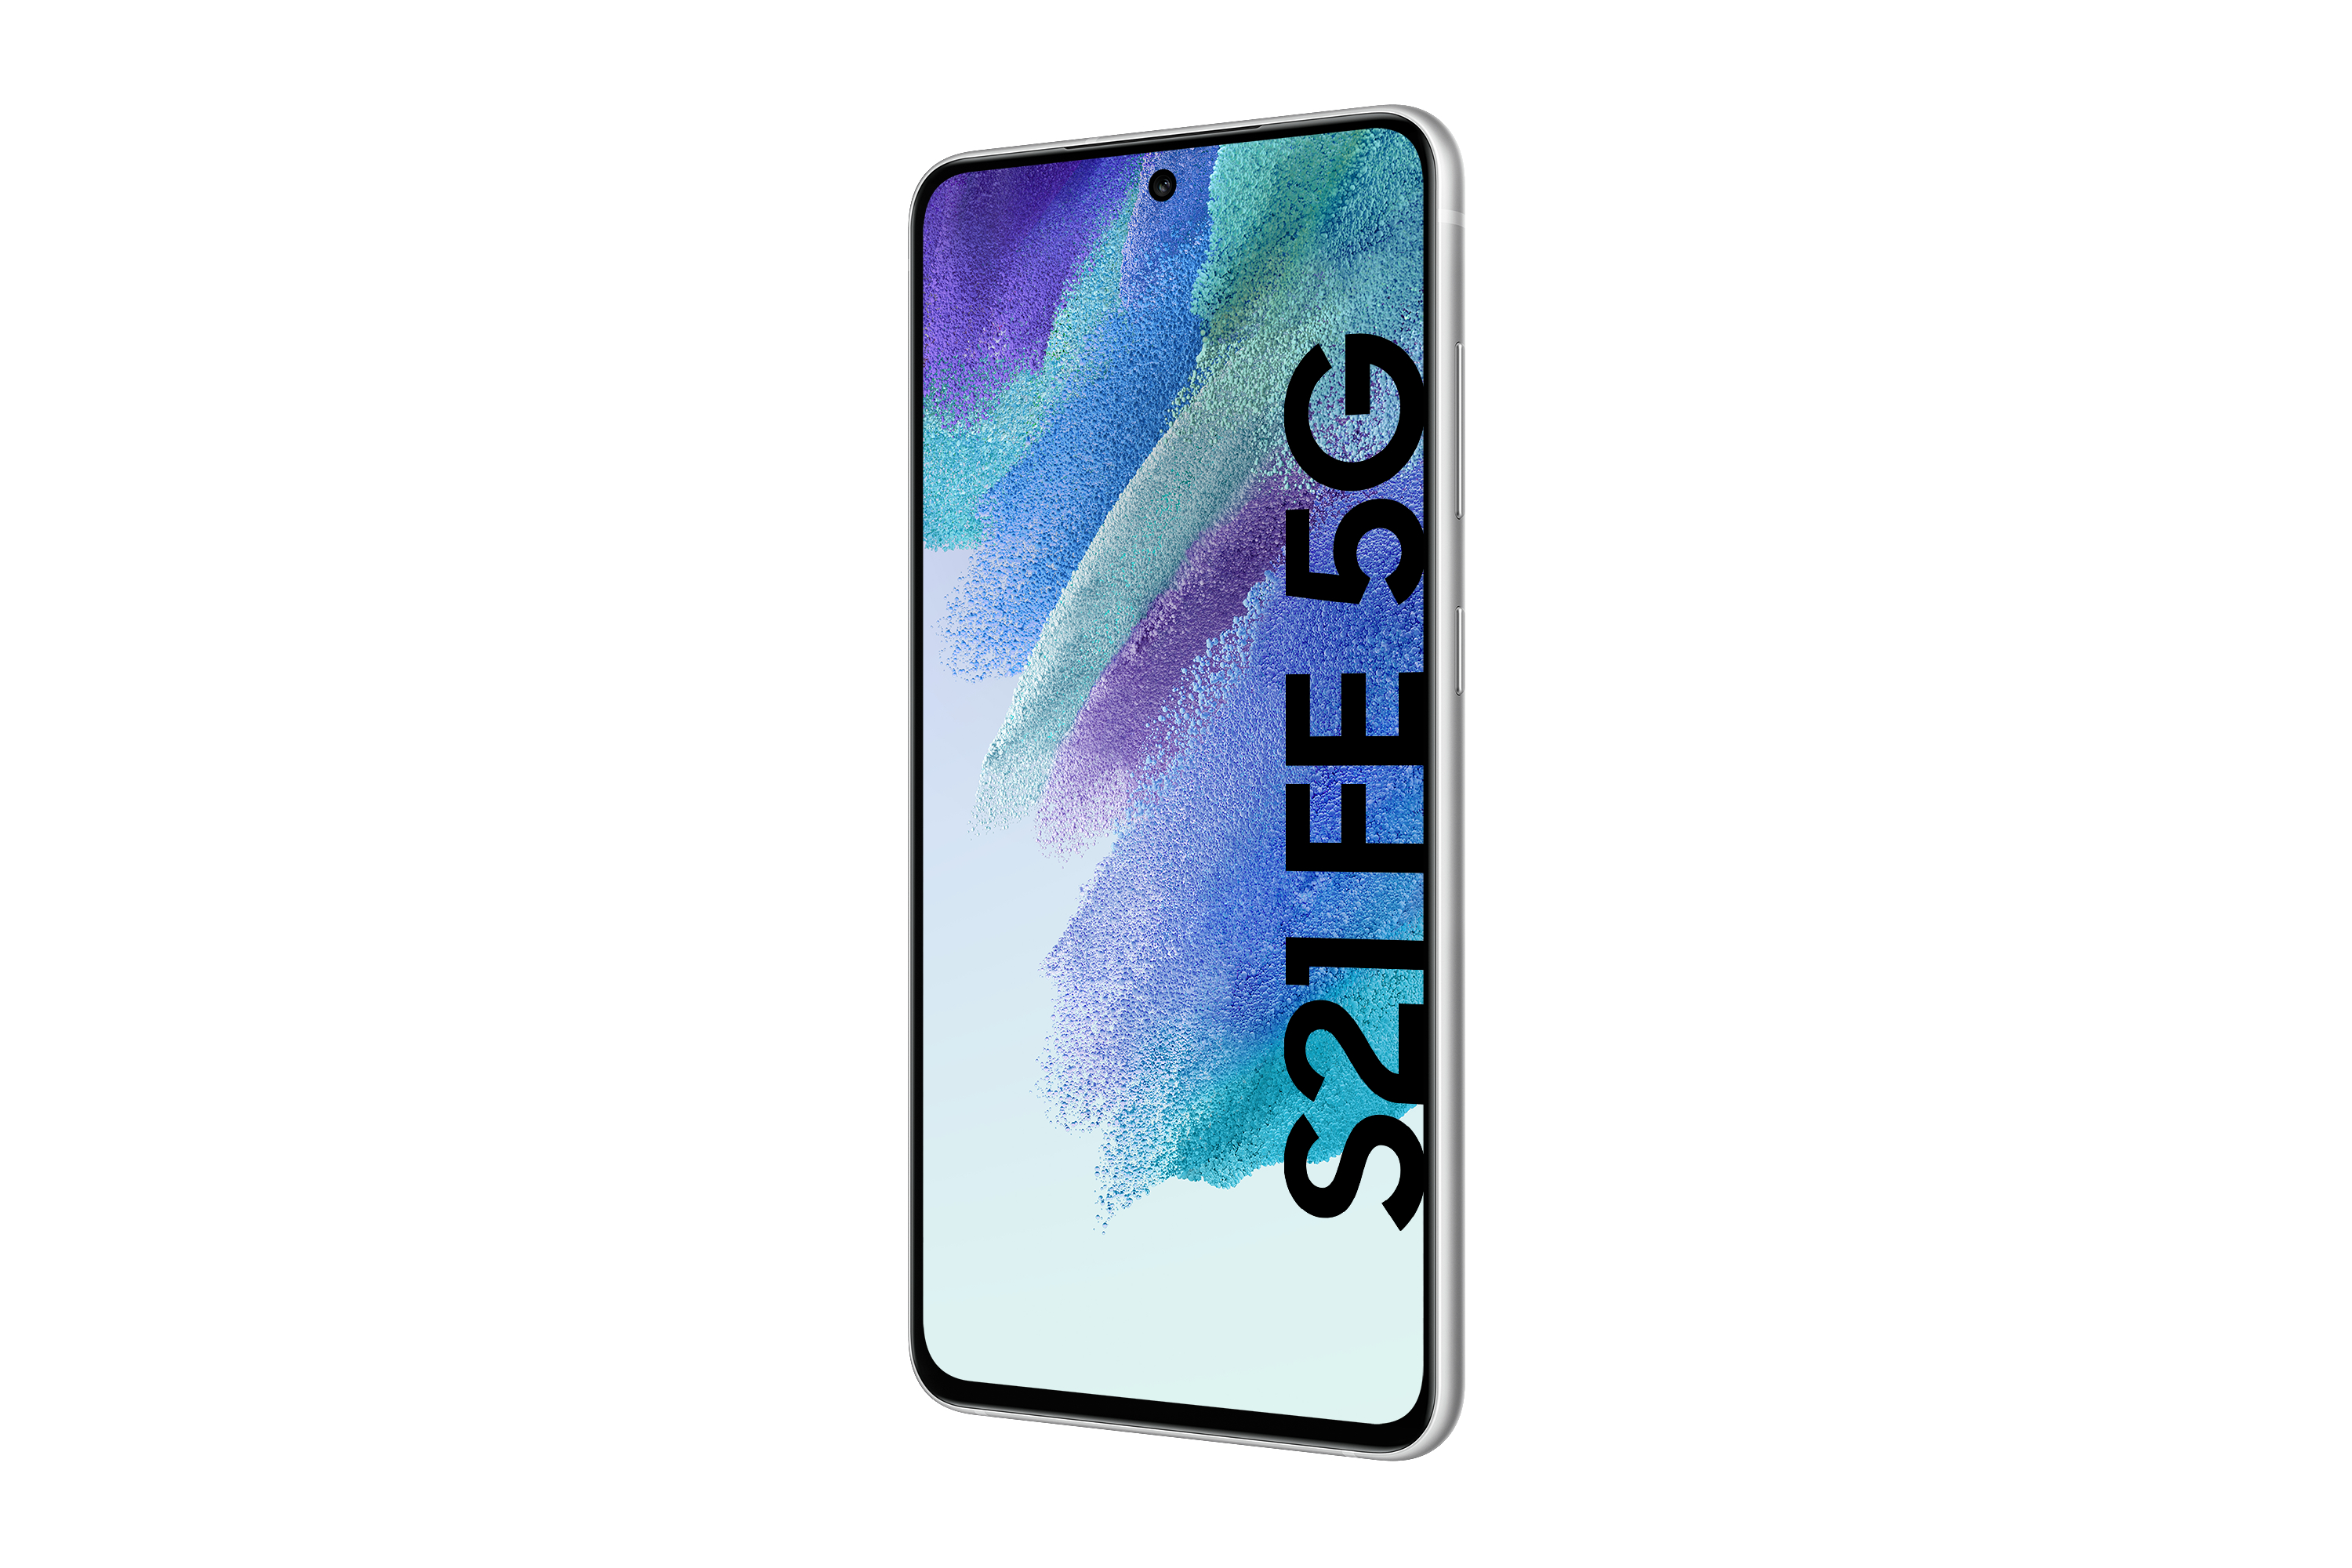 White SAMSUNG FE 256 SIM Dual 5G S21 Galaxy GB